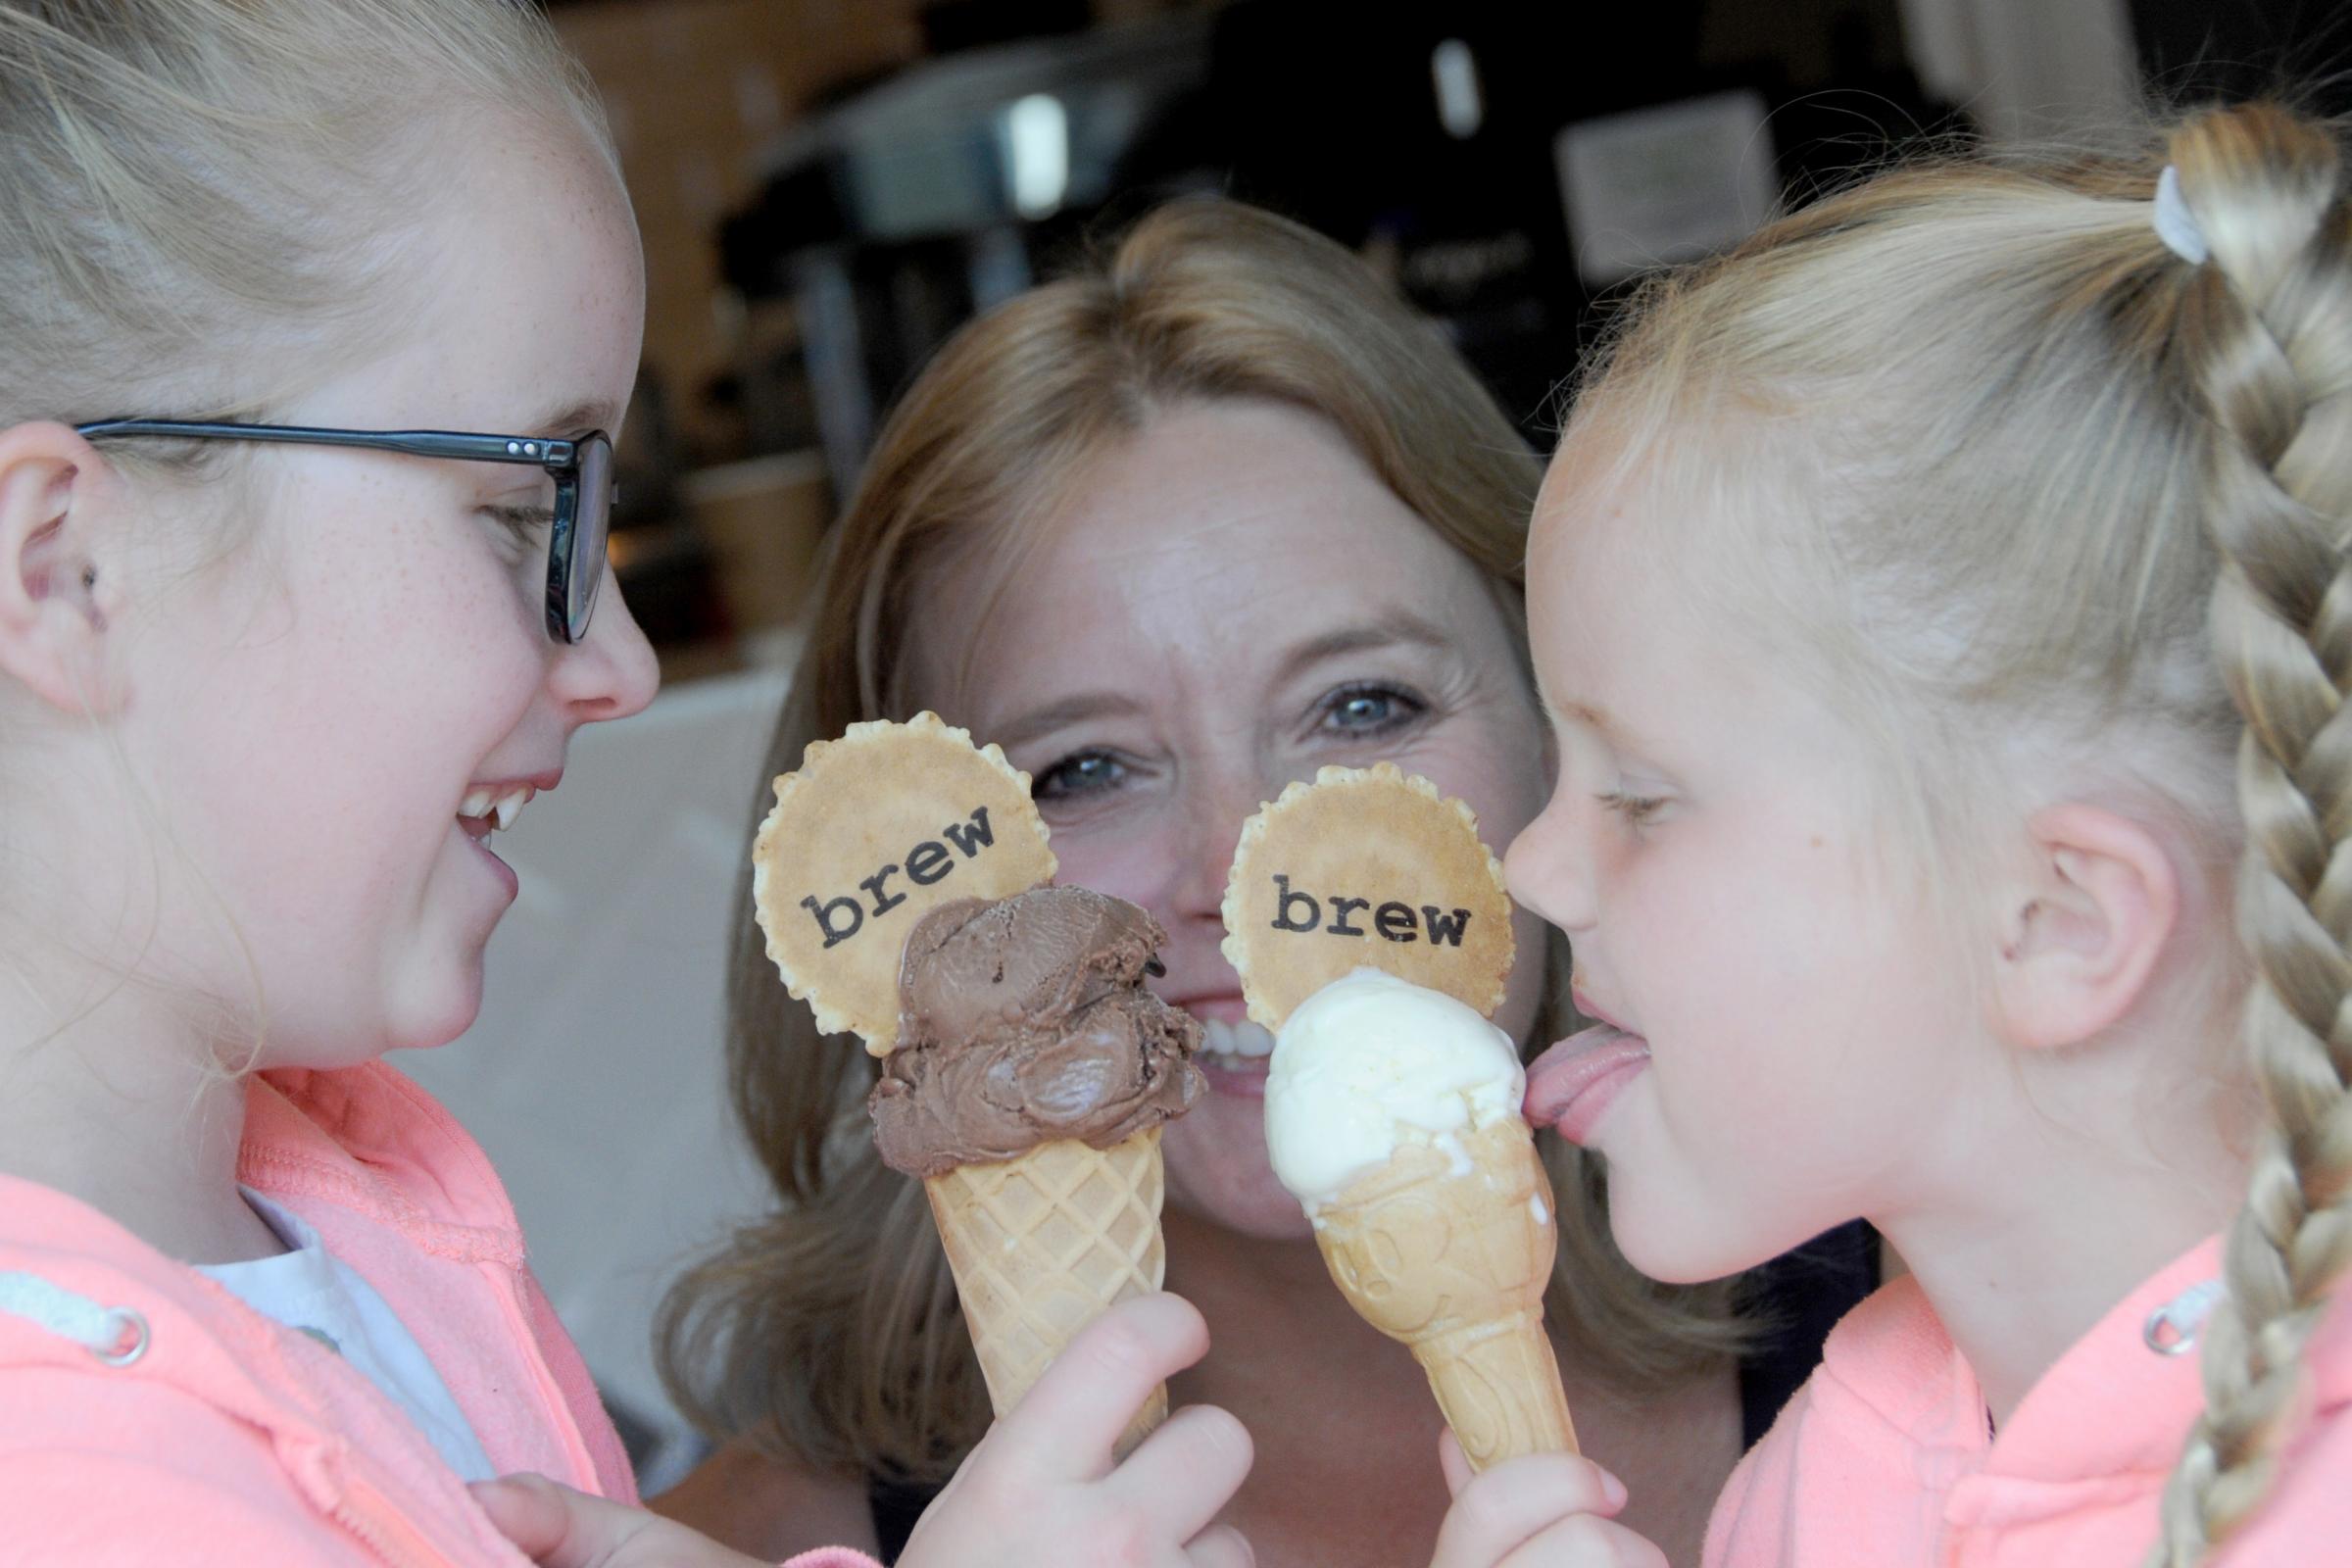 Kate with her ice cream loving nieces Eva and Mia